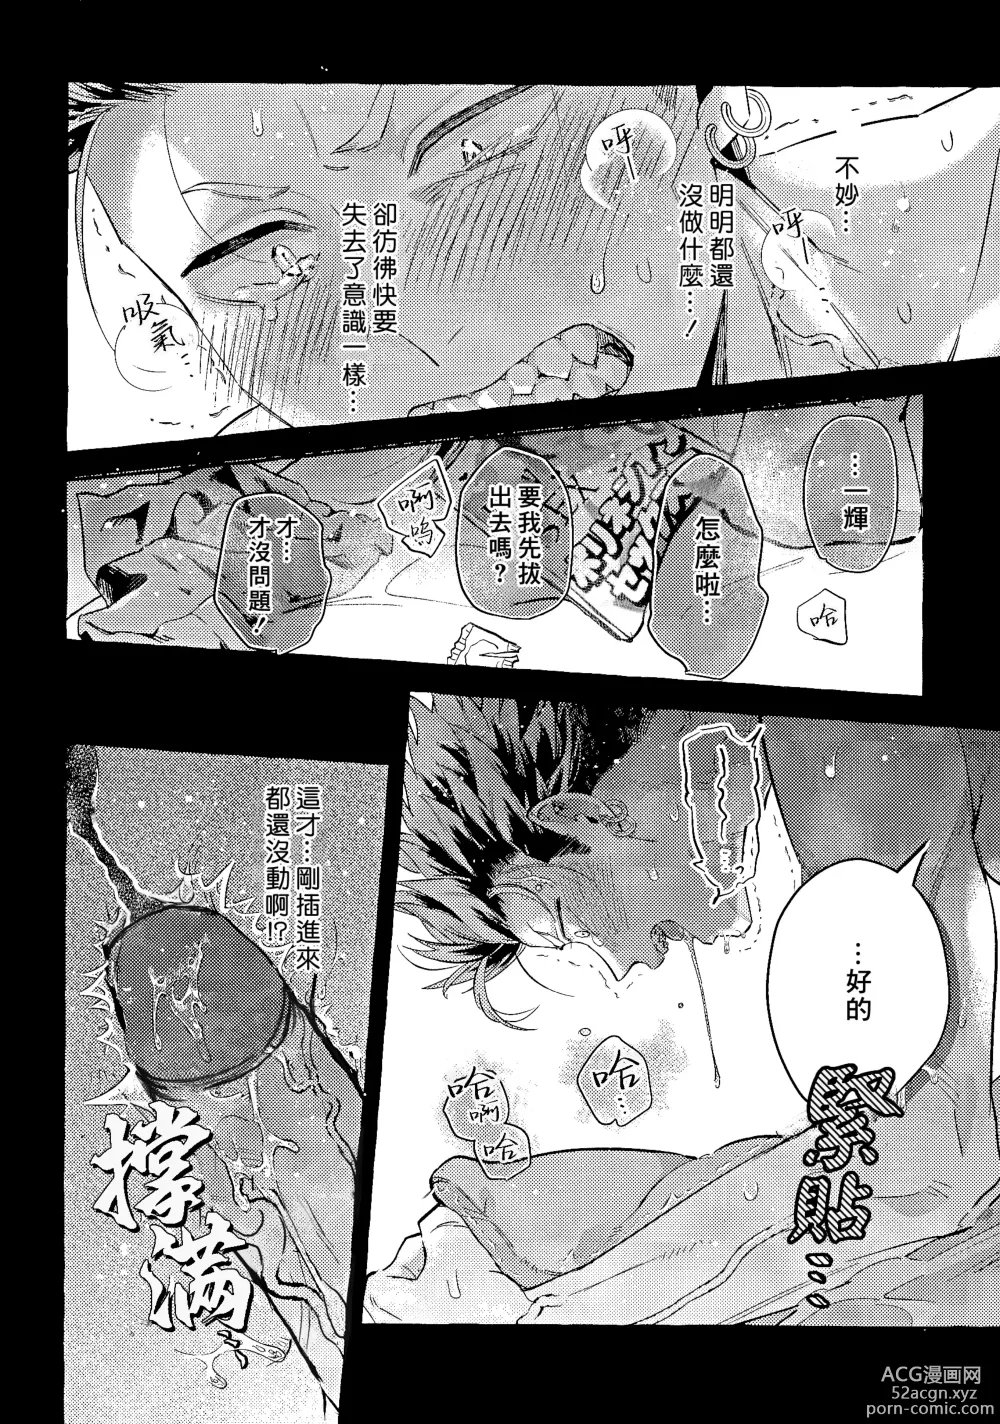 Page 5 of doujinshi skip run!run!run! (uncensored)